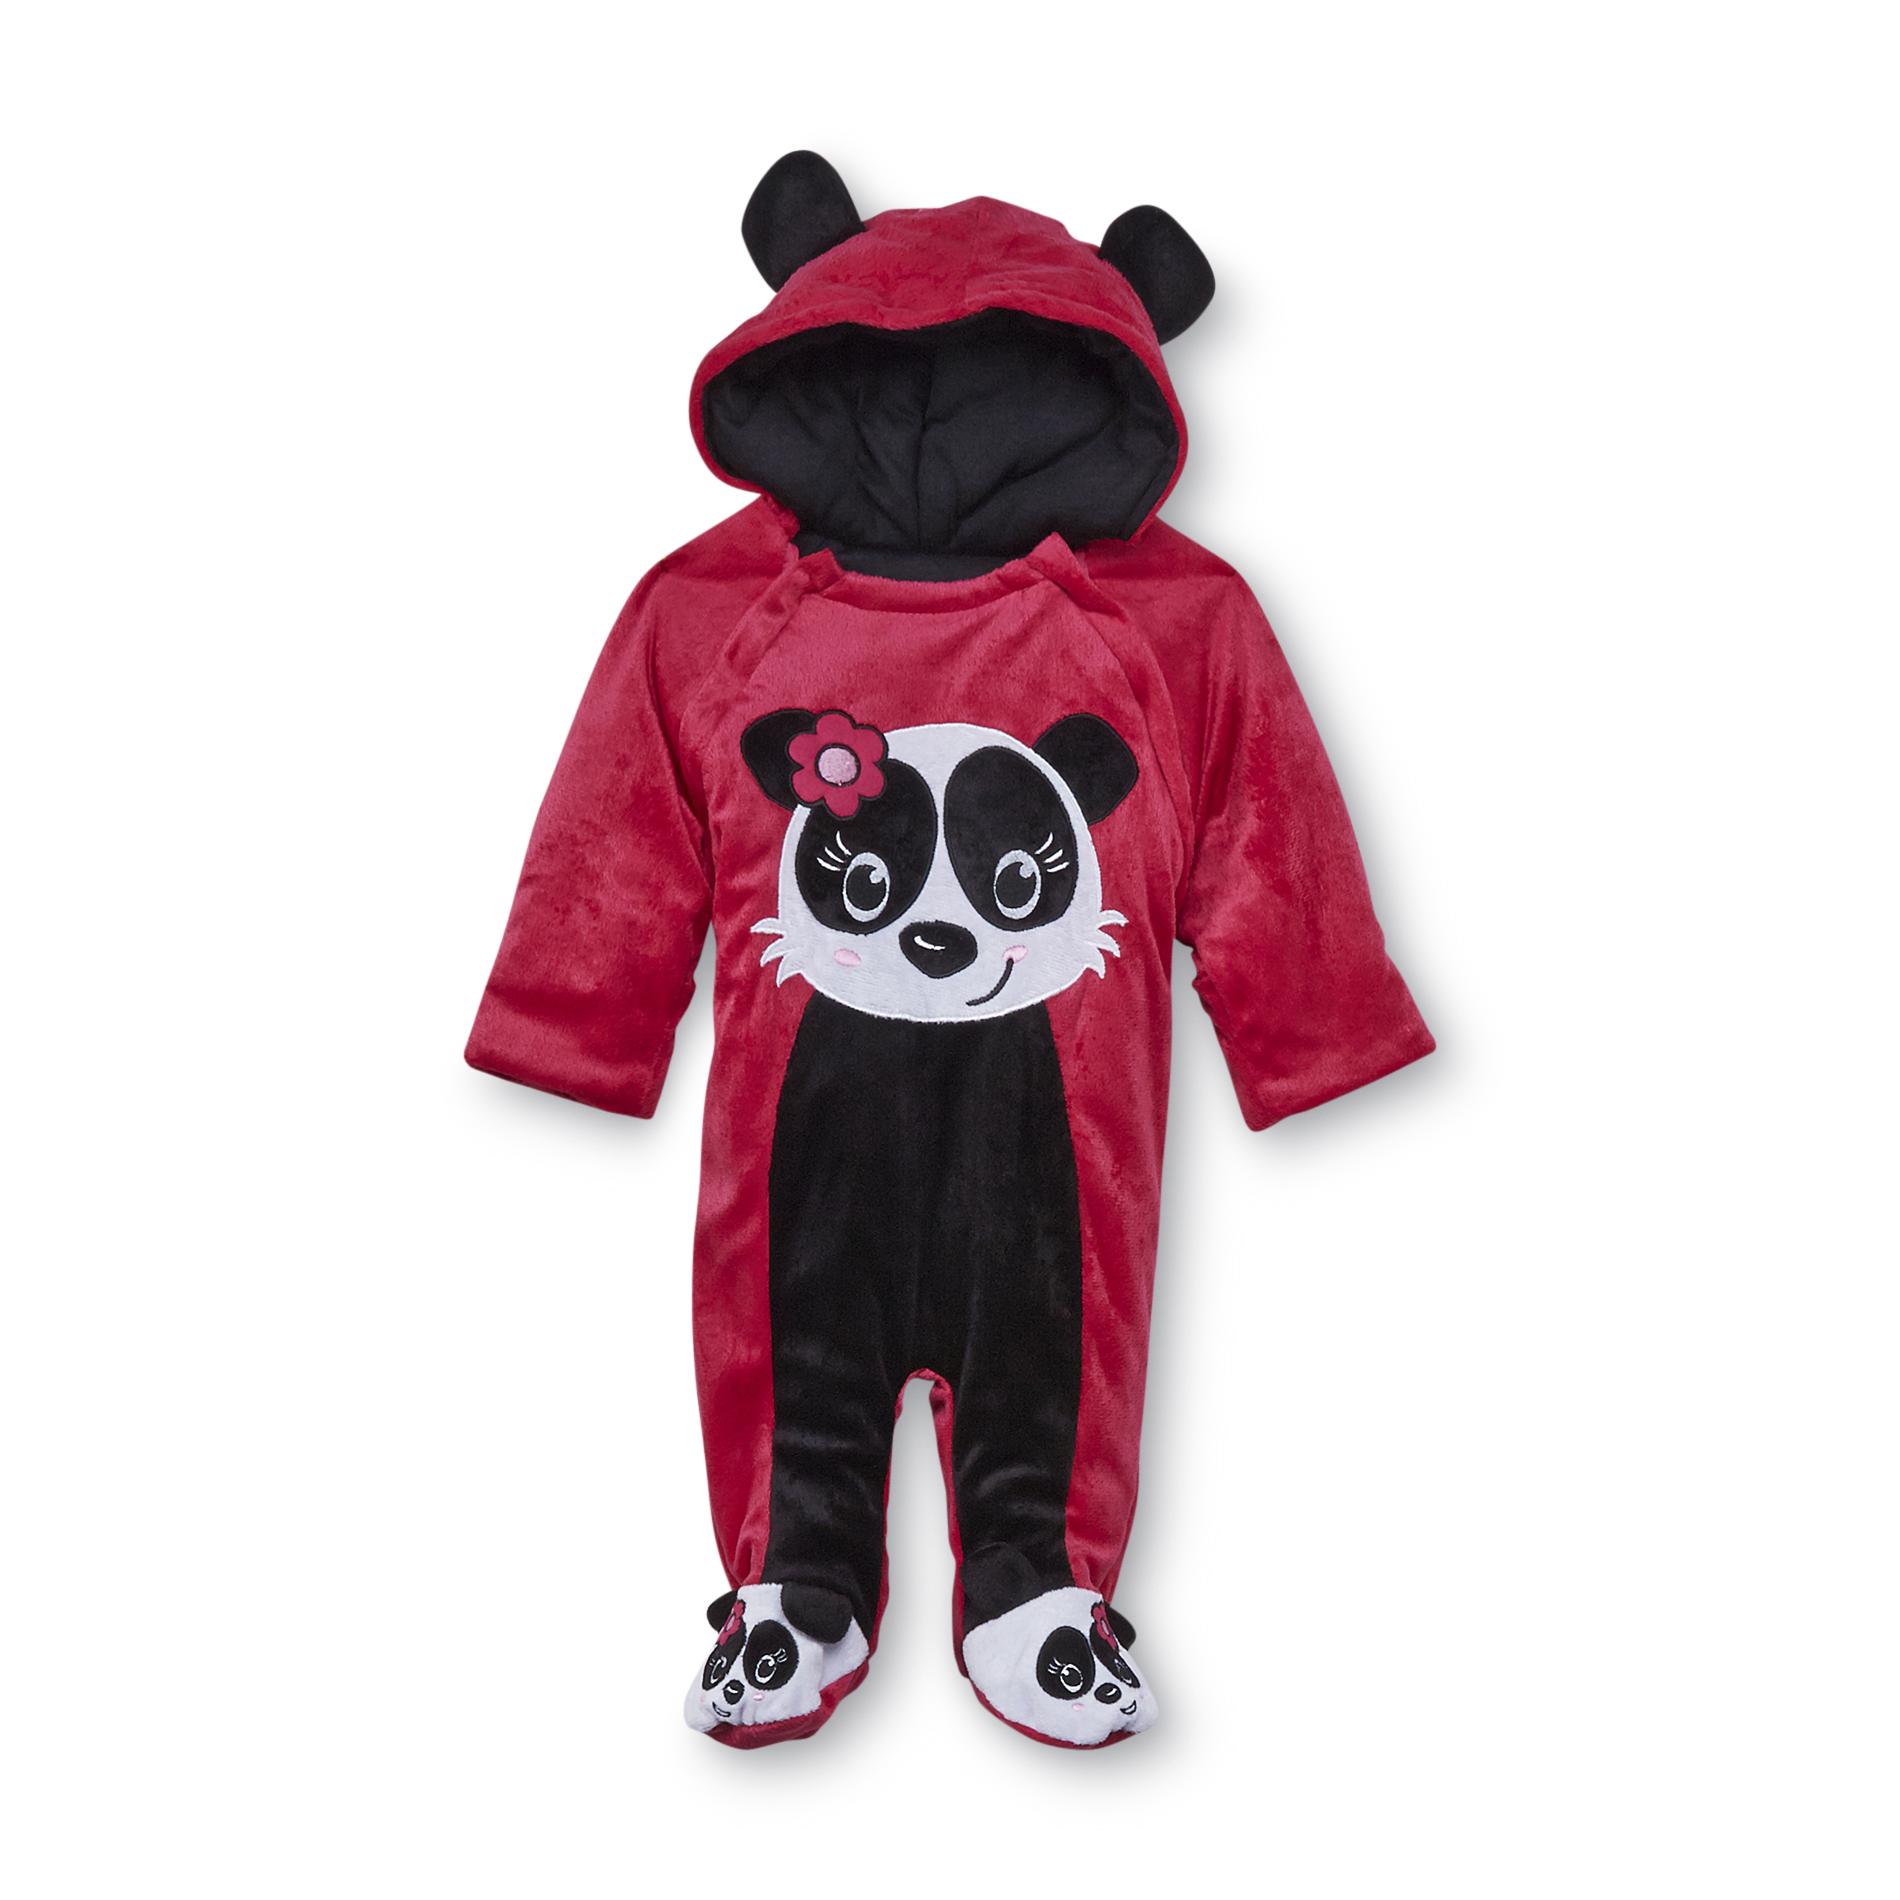 Small Wonders Newborn & Infant Girl's Plush Pram Suit - Panda